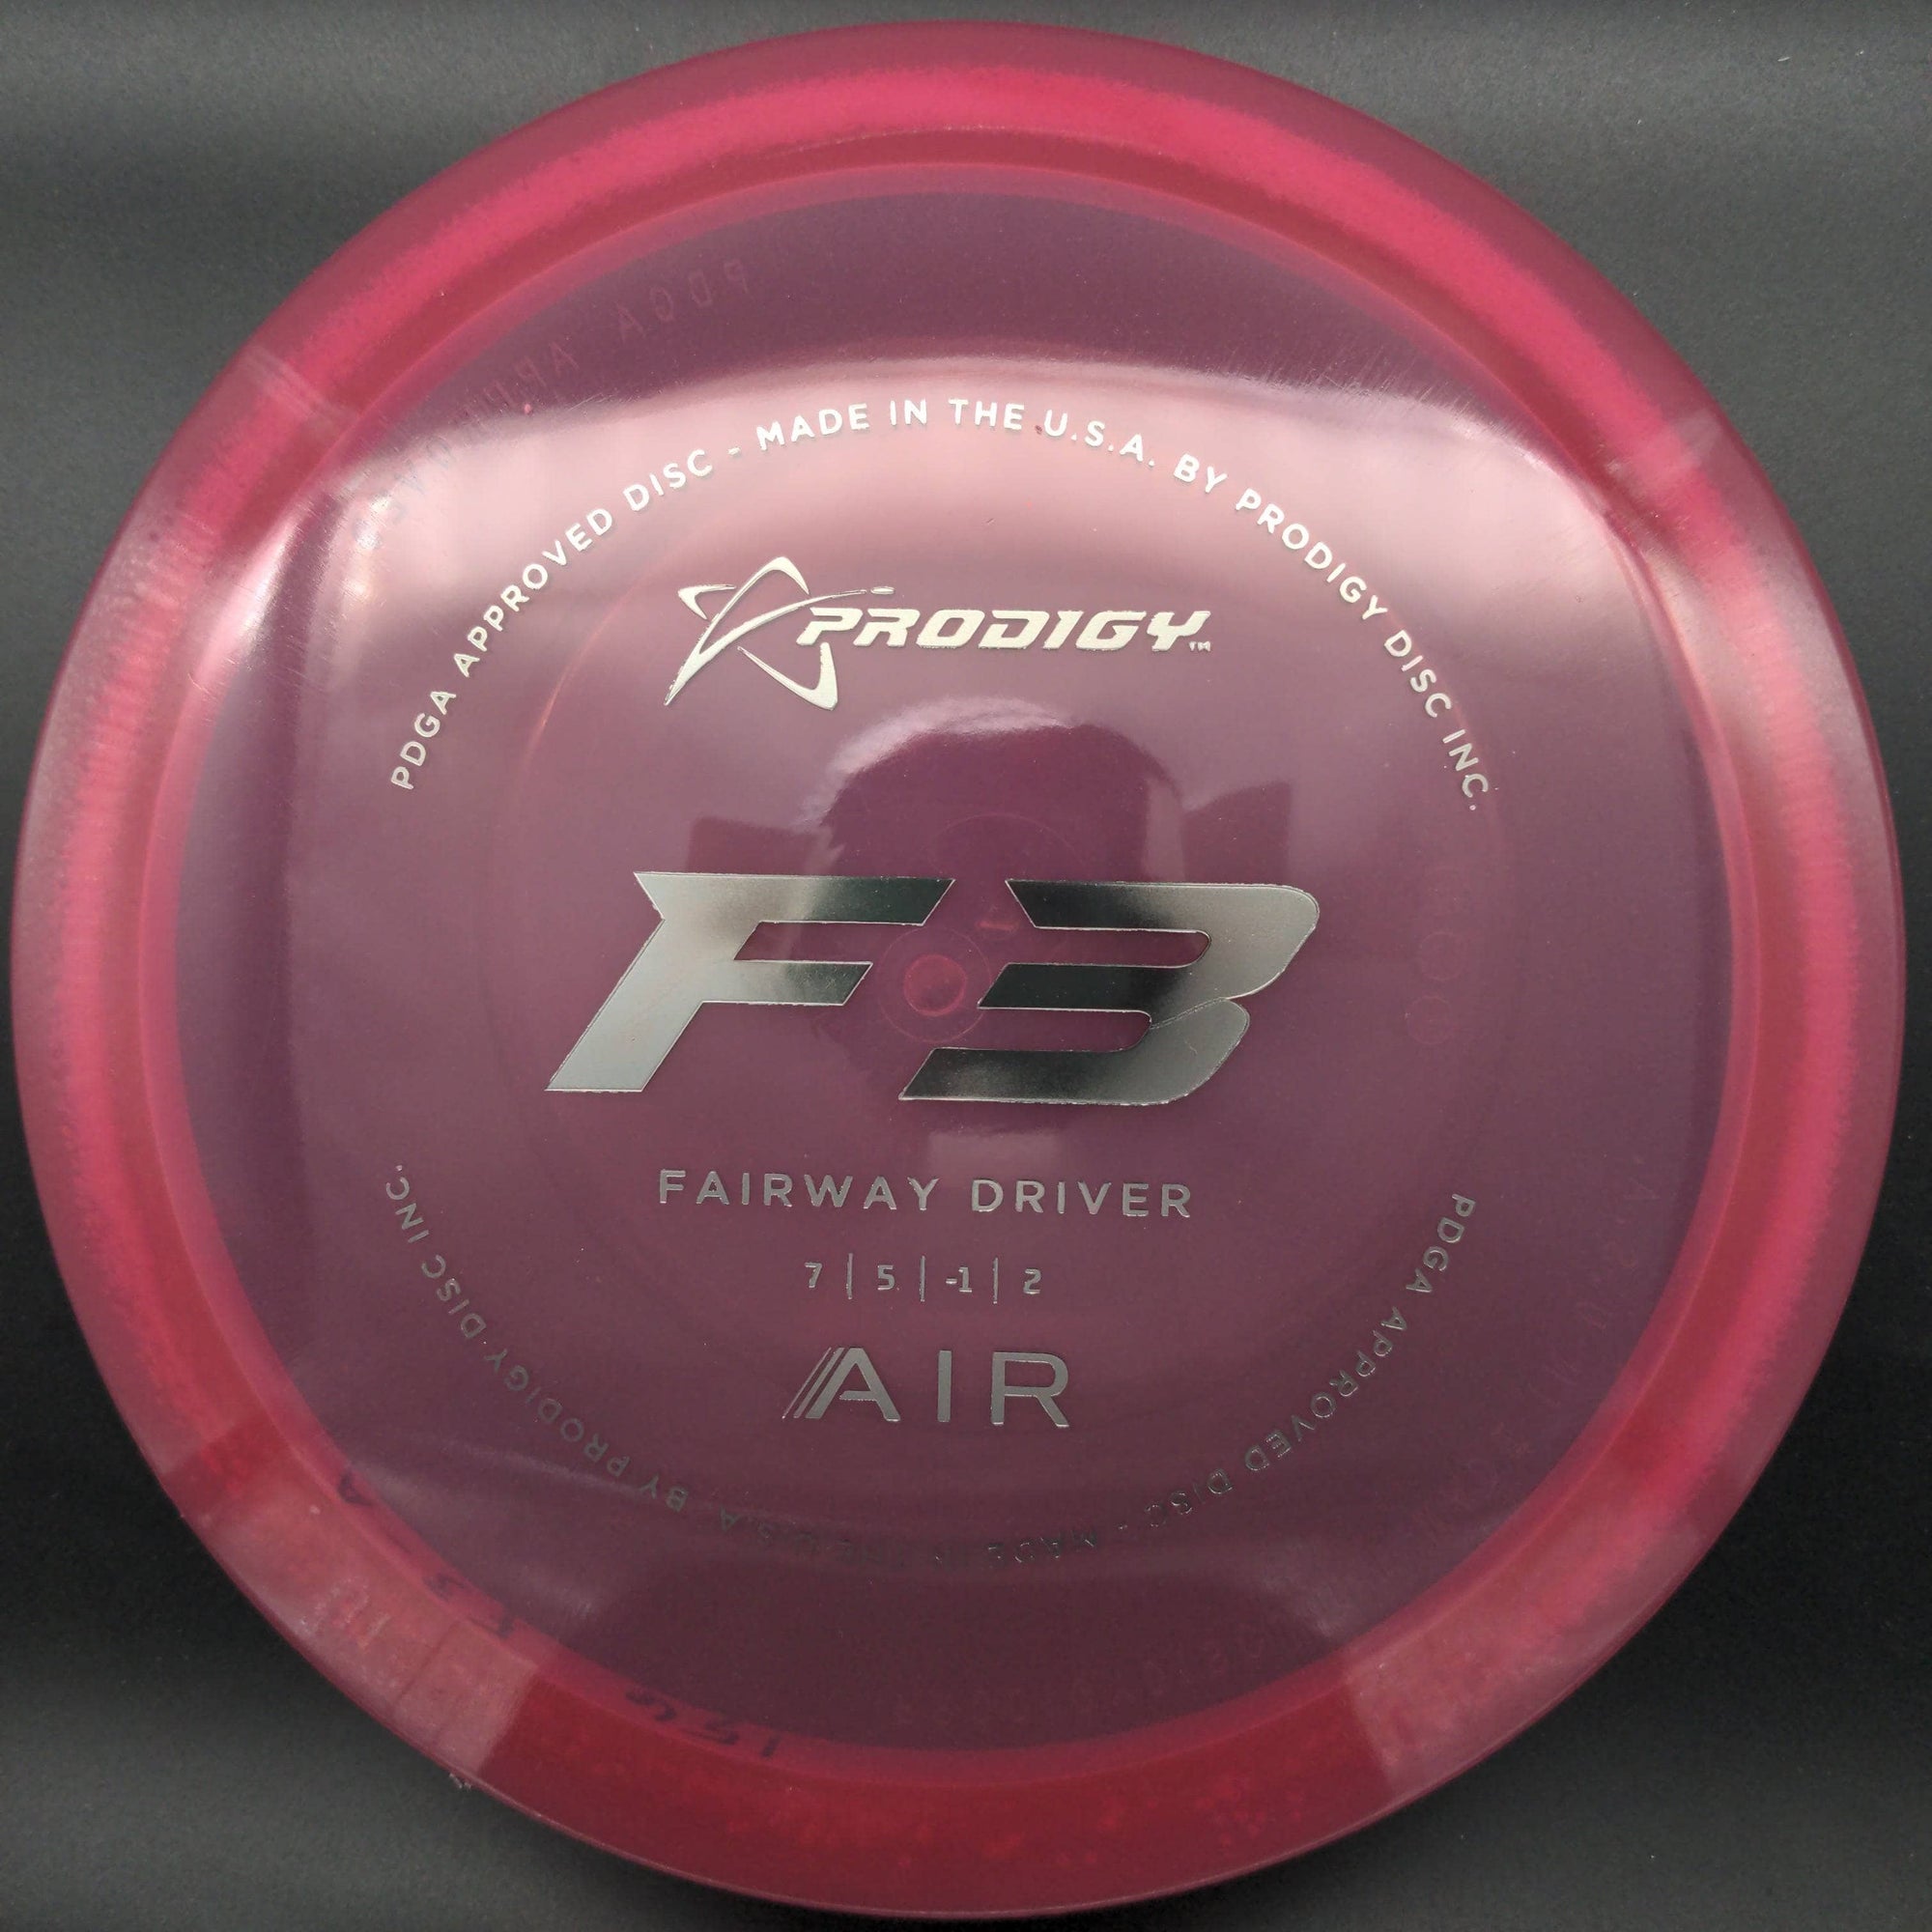 Prodigy Fairway Driver F3, Air Plastic